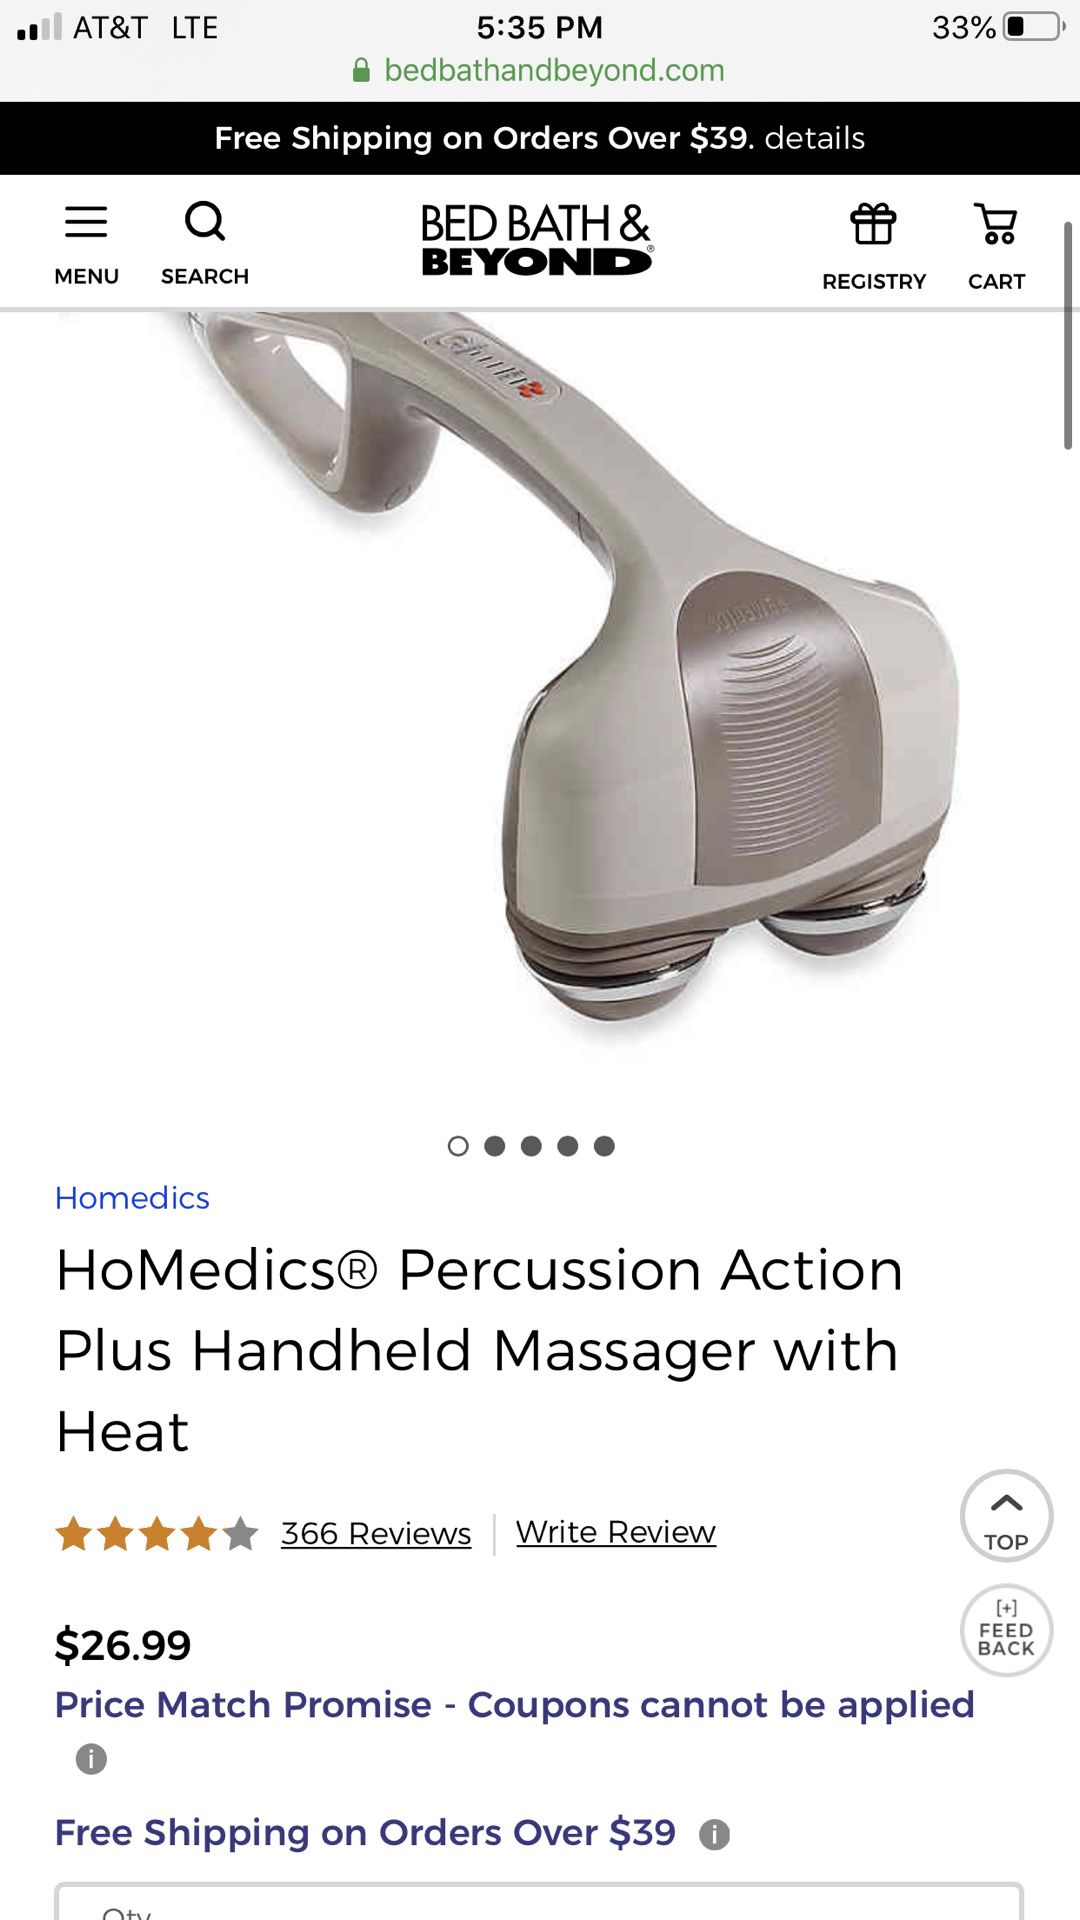 HOMEDICS Percussion Action handheld massager